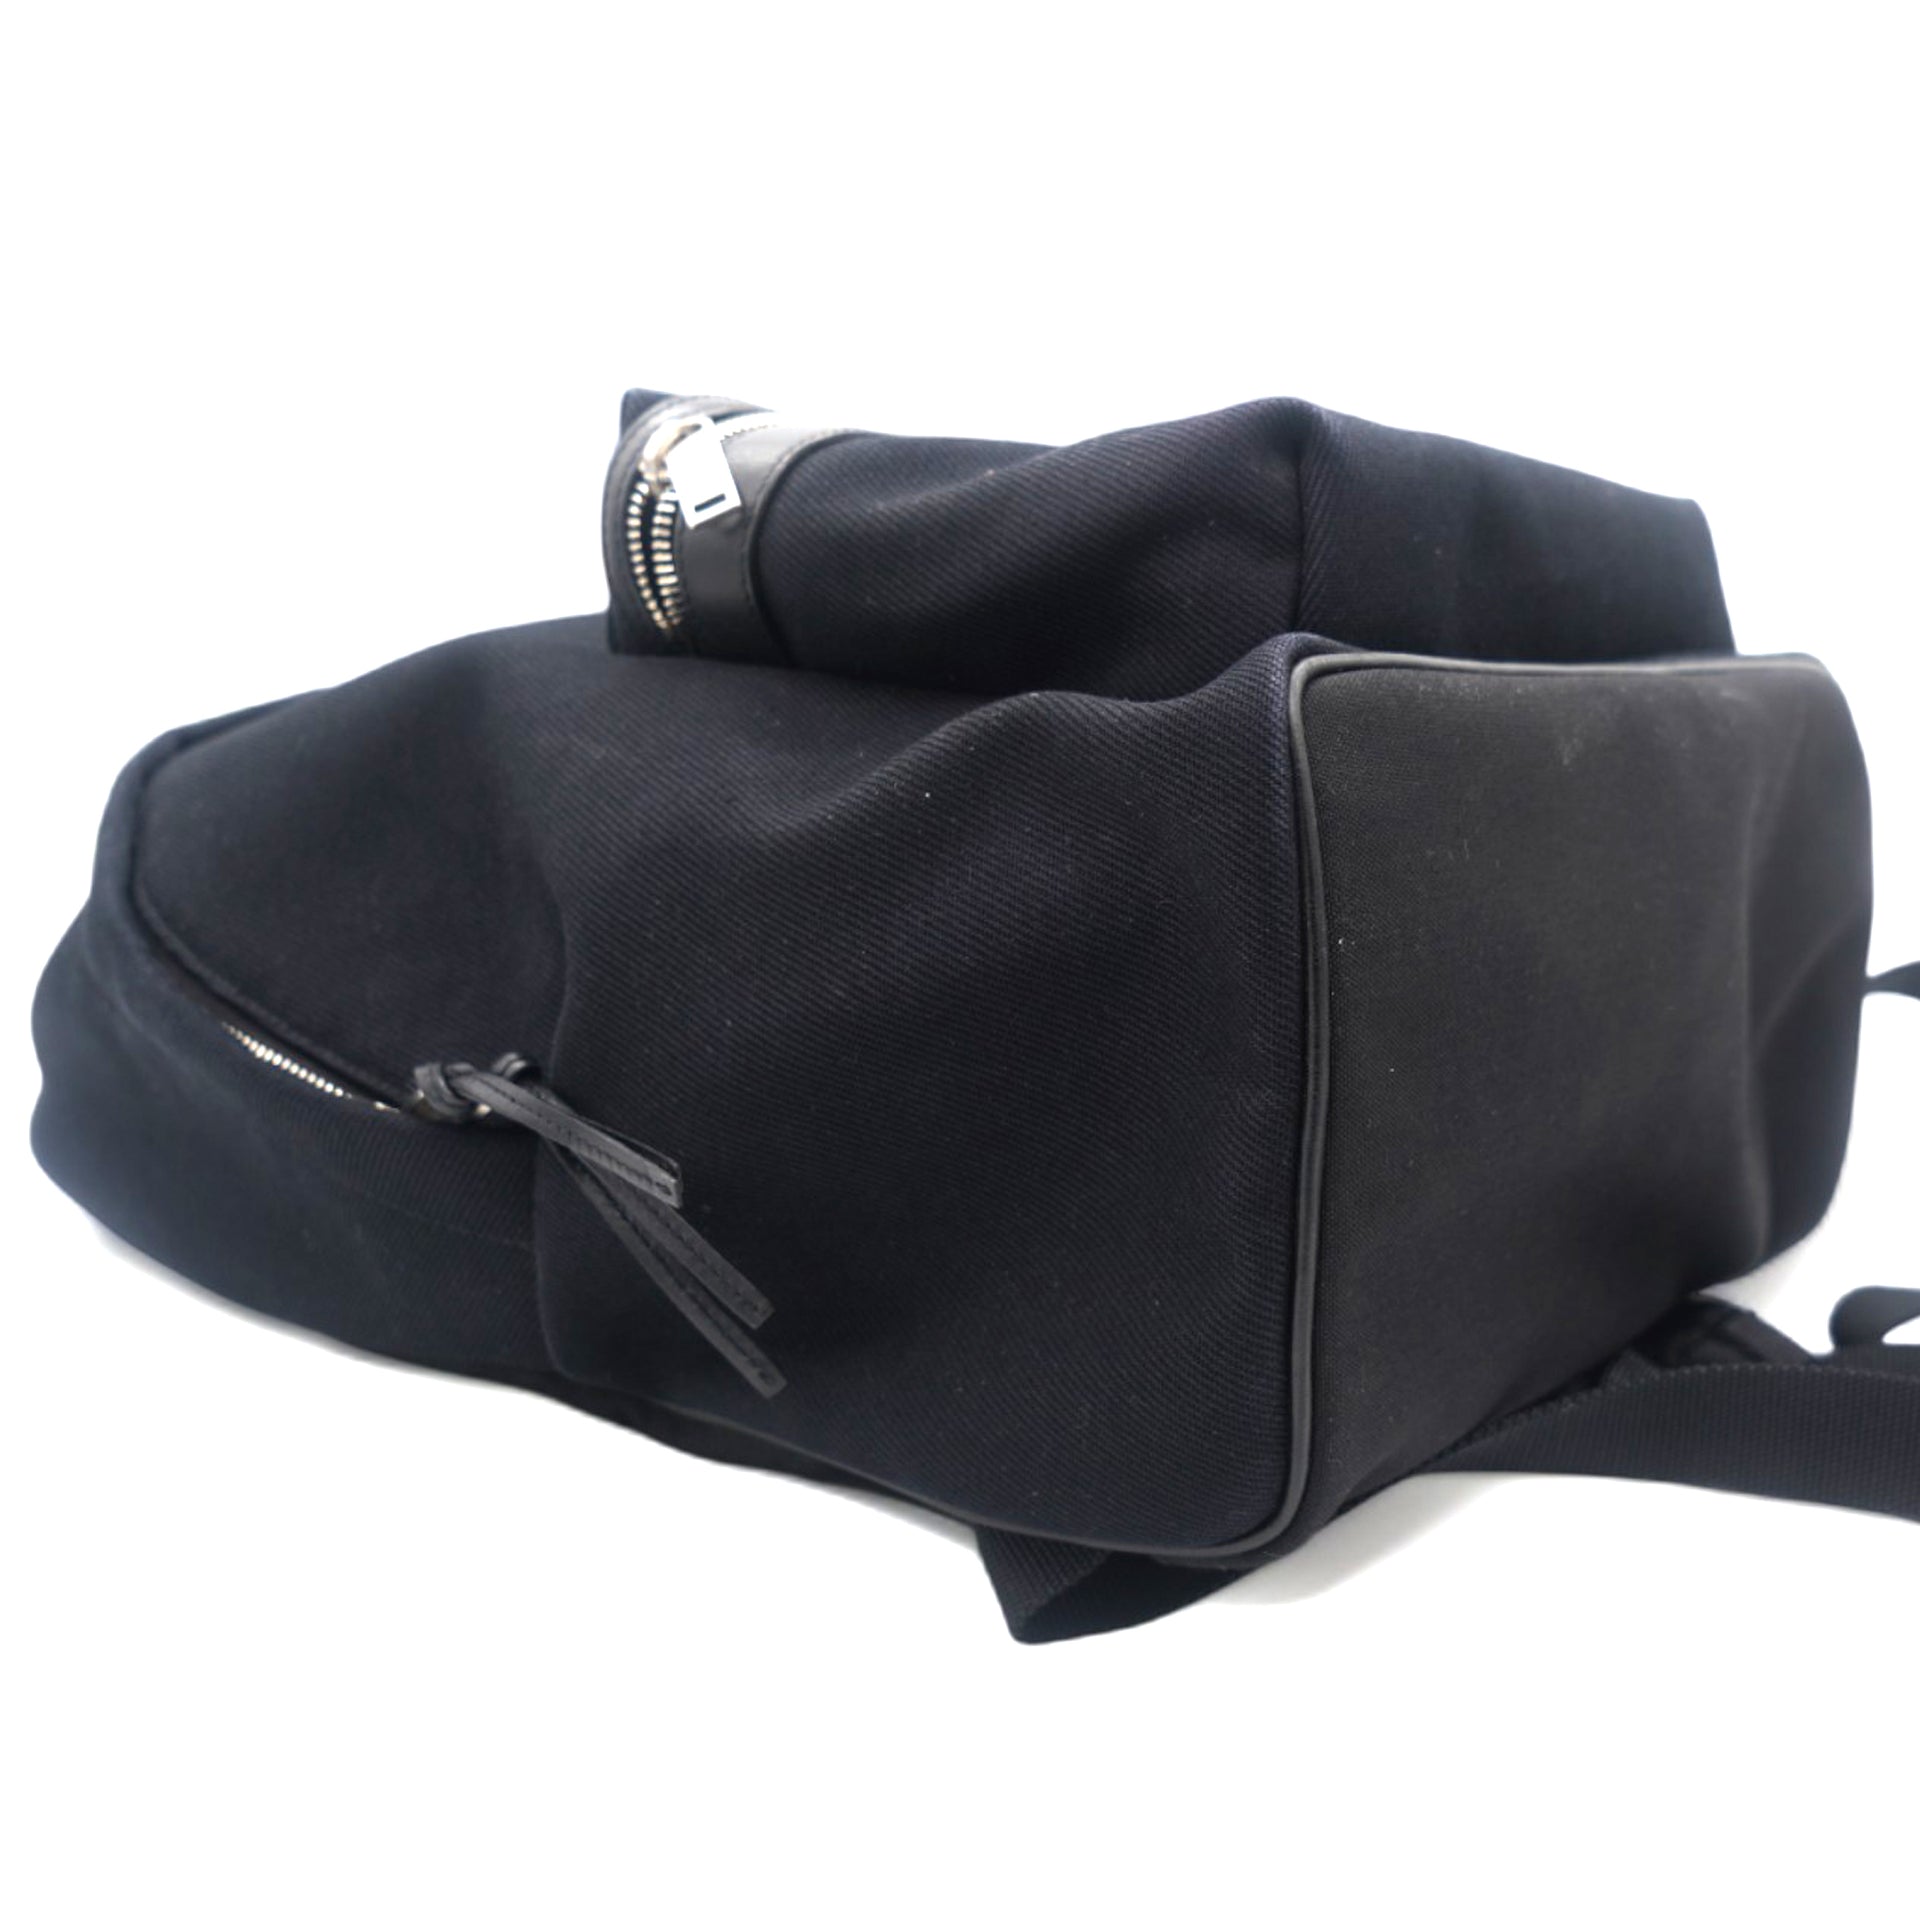 Black Fabric Backpack